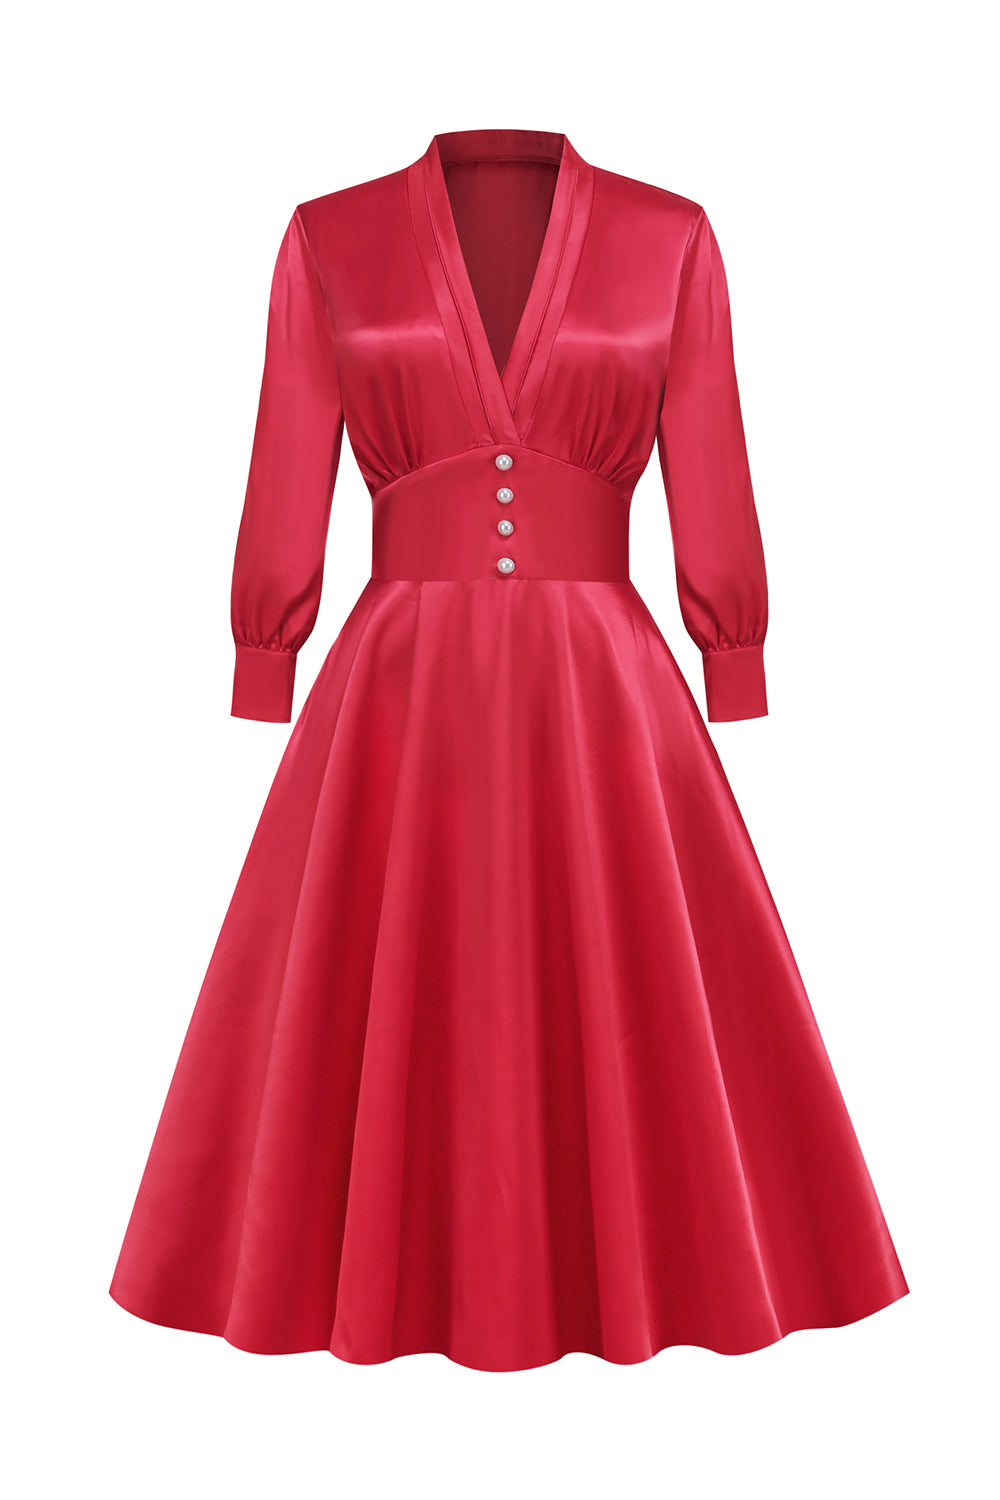 Zapaka Women Red Vintage Dress Retro Style V Neck 1950s Dress with Long ...